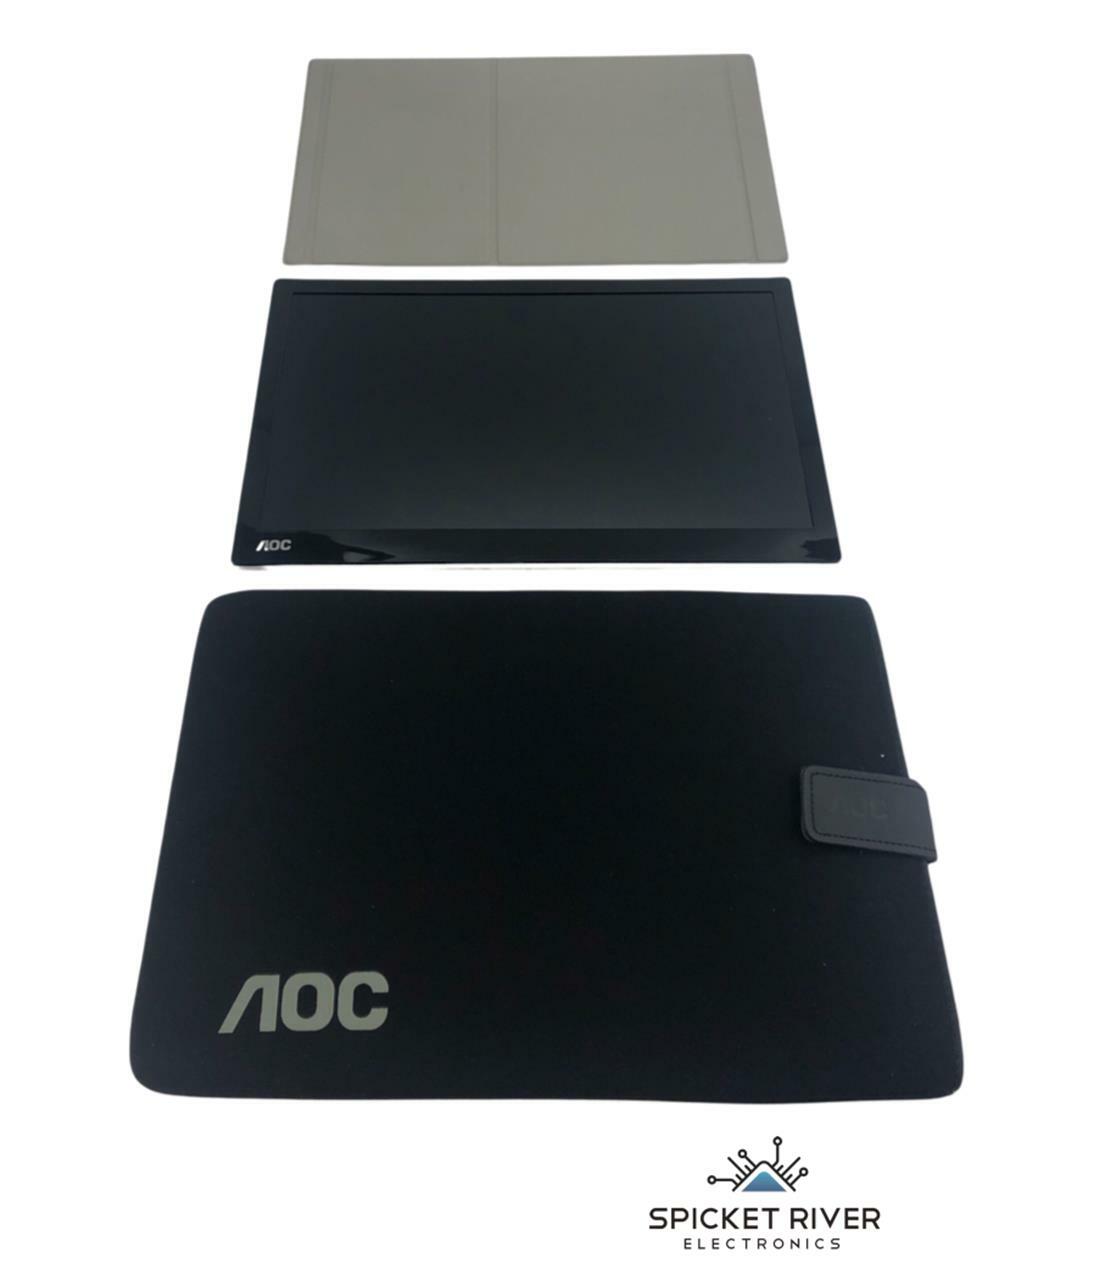 AOC 156LM00007 I1601C 15.6" FHD USB-C LED LCD Portable Monitor